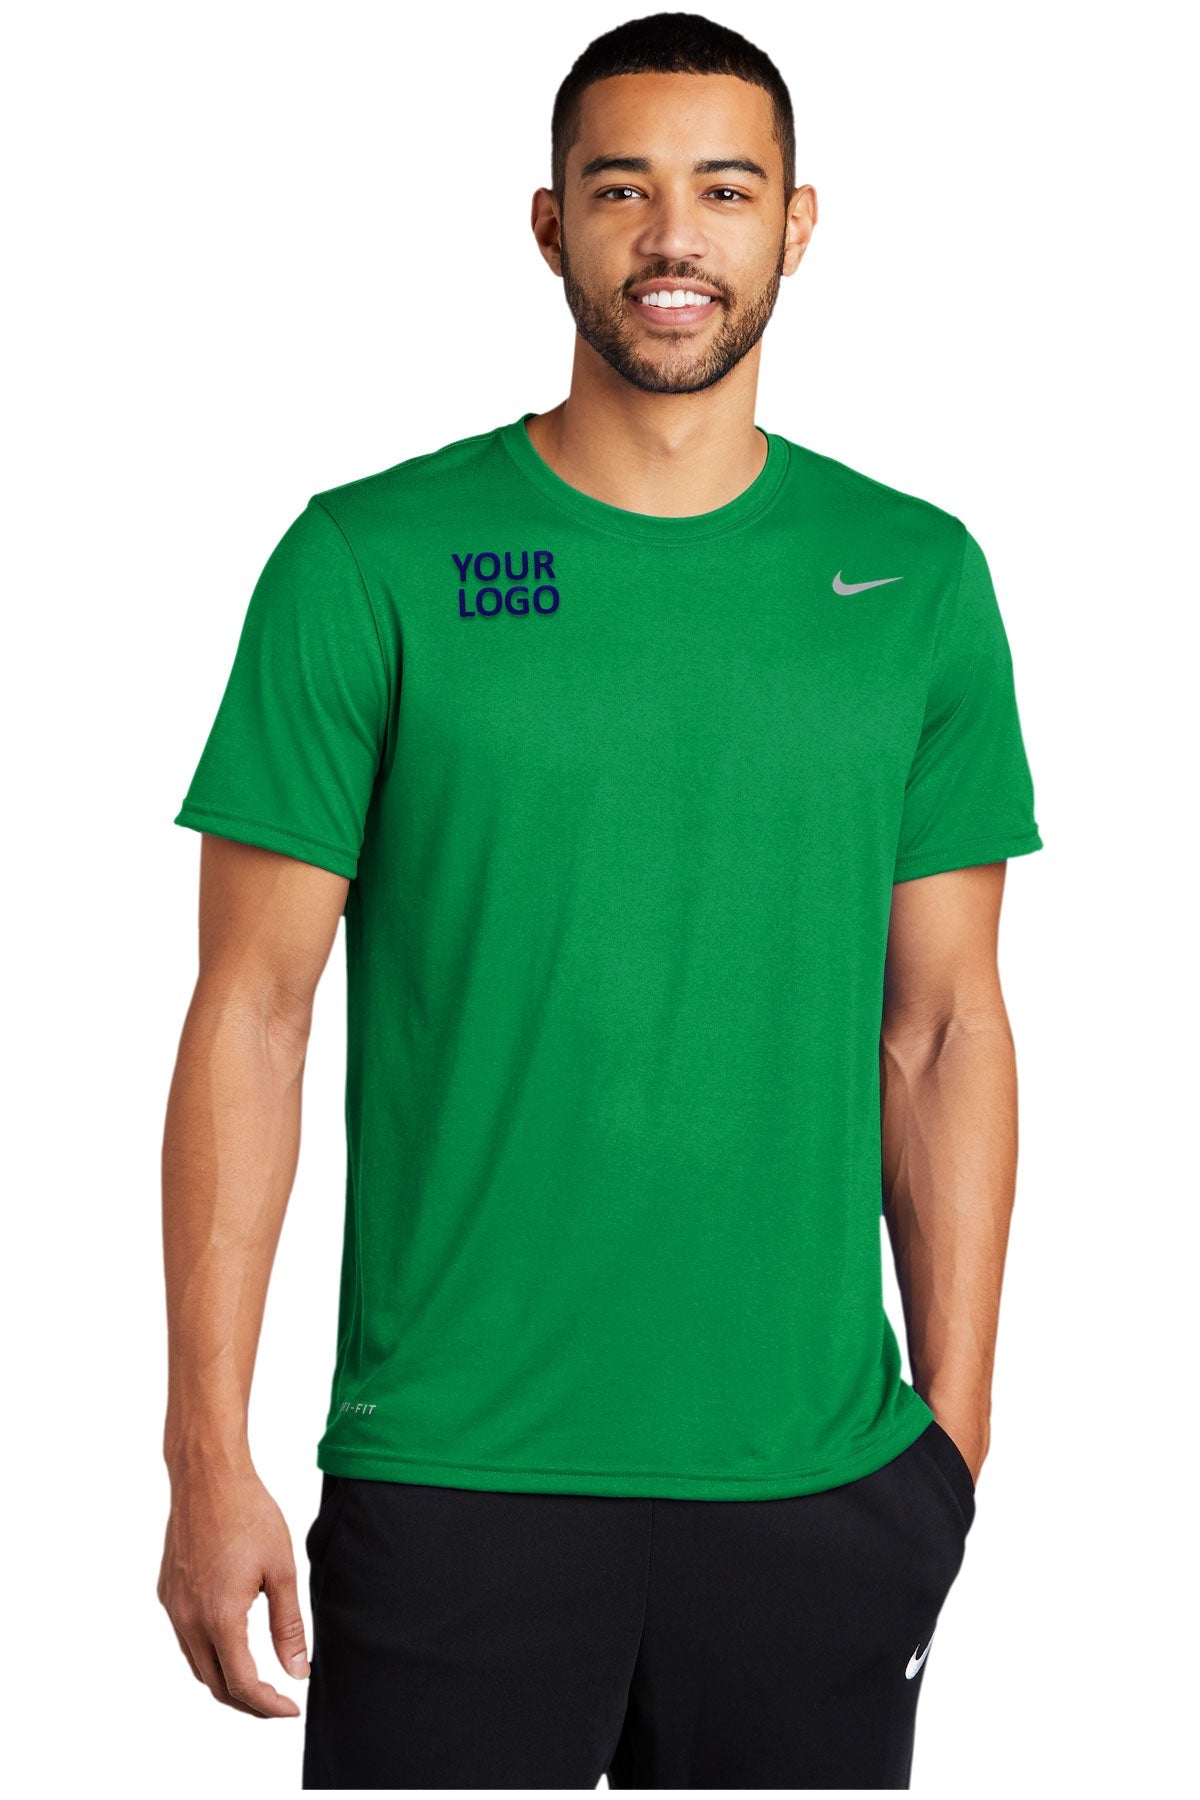 Nike Team rLegend Customized Tee's, Apple Green